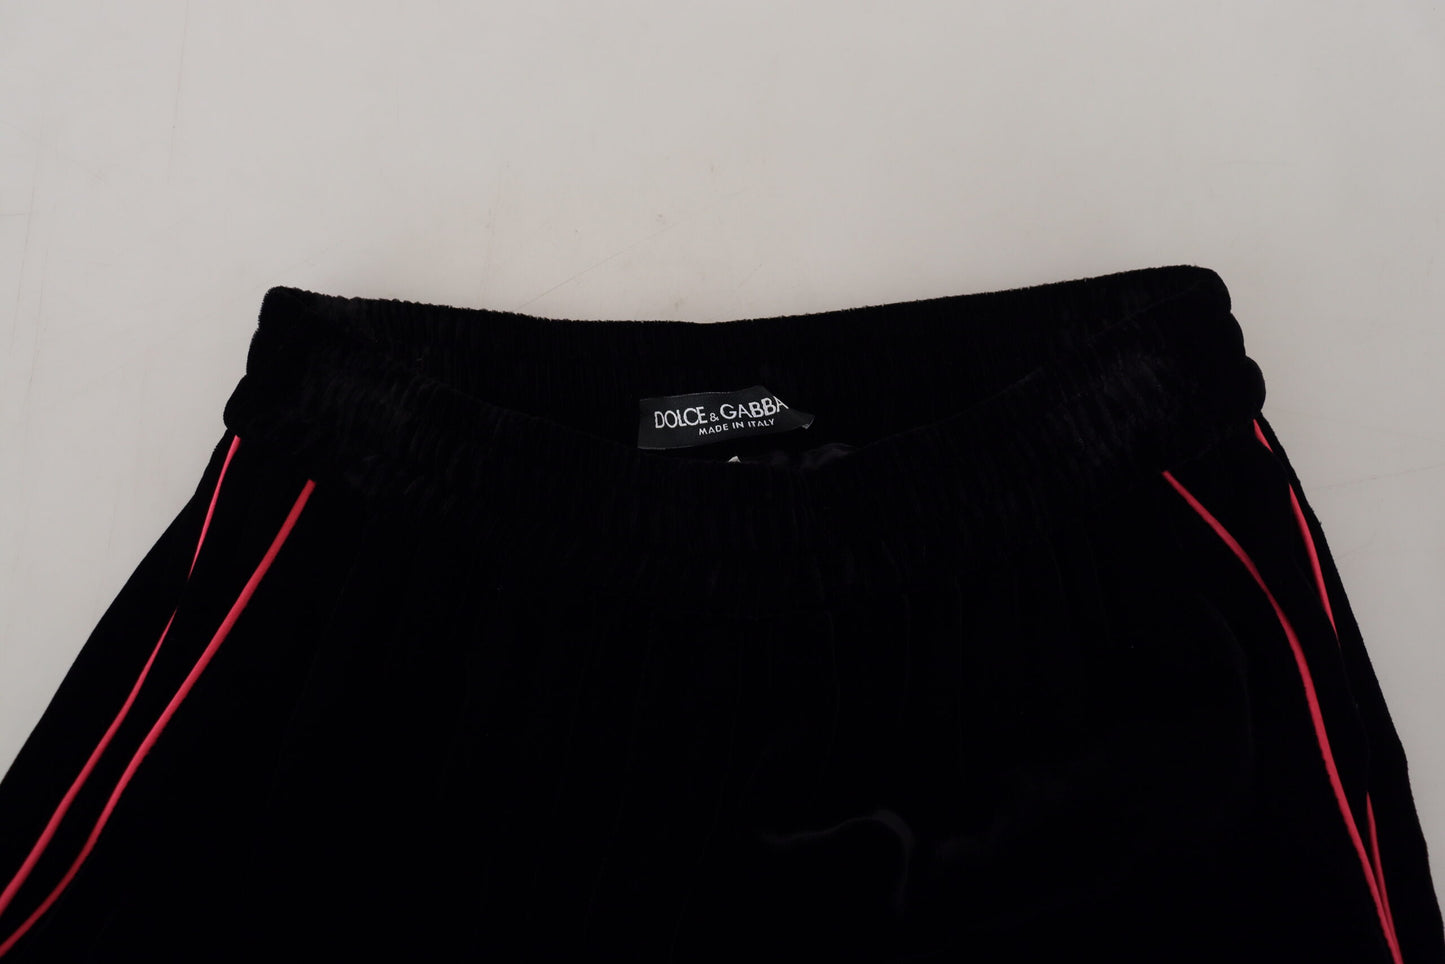 Dolce & Gabbana Black Samt hohe Taillenhosen Hosen Hosen